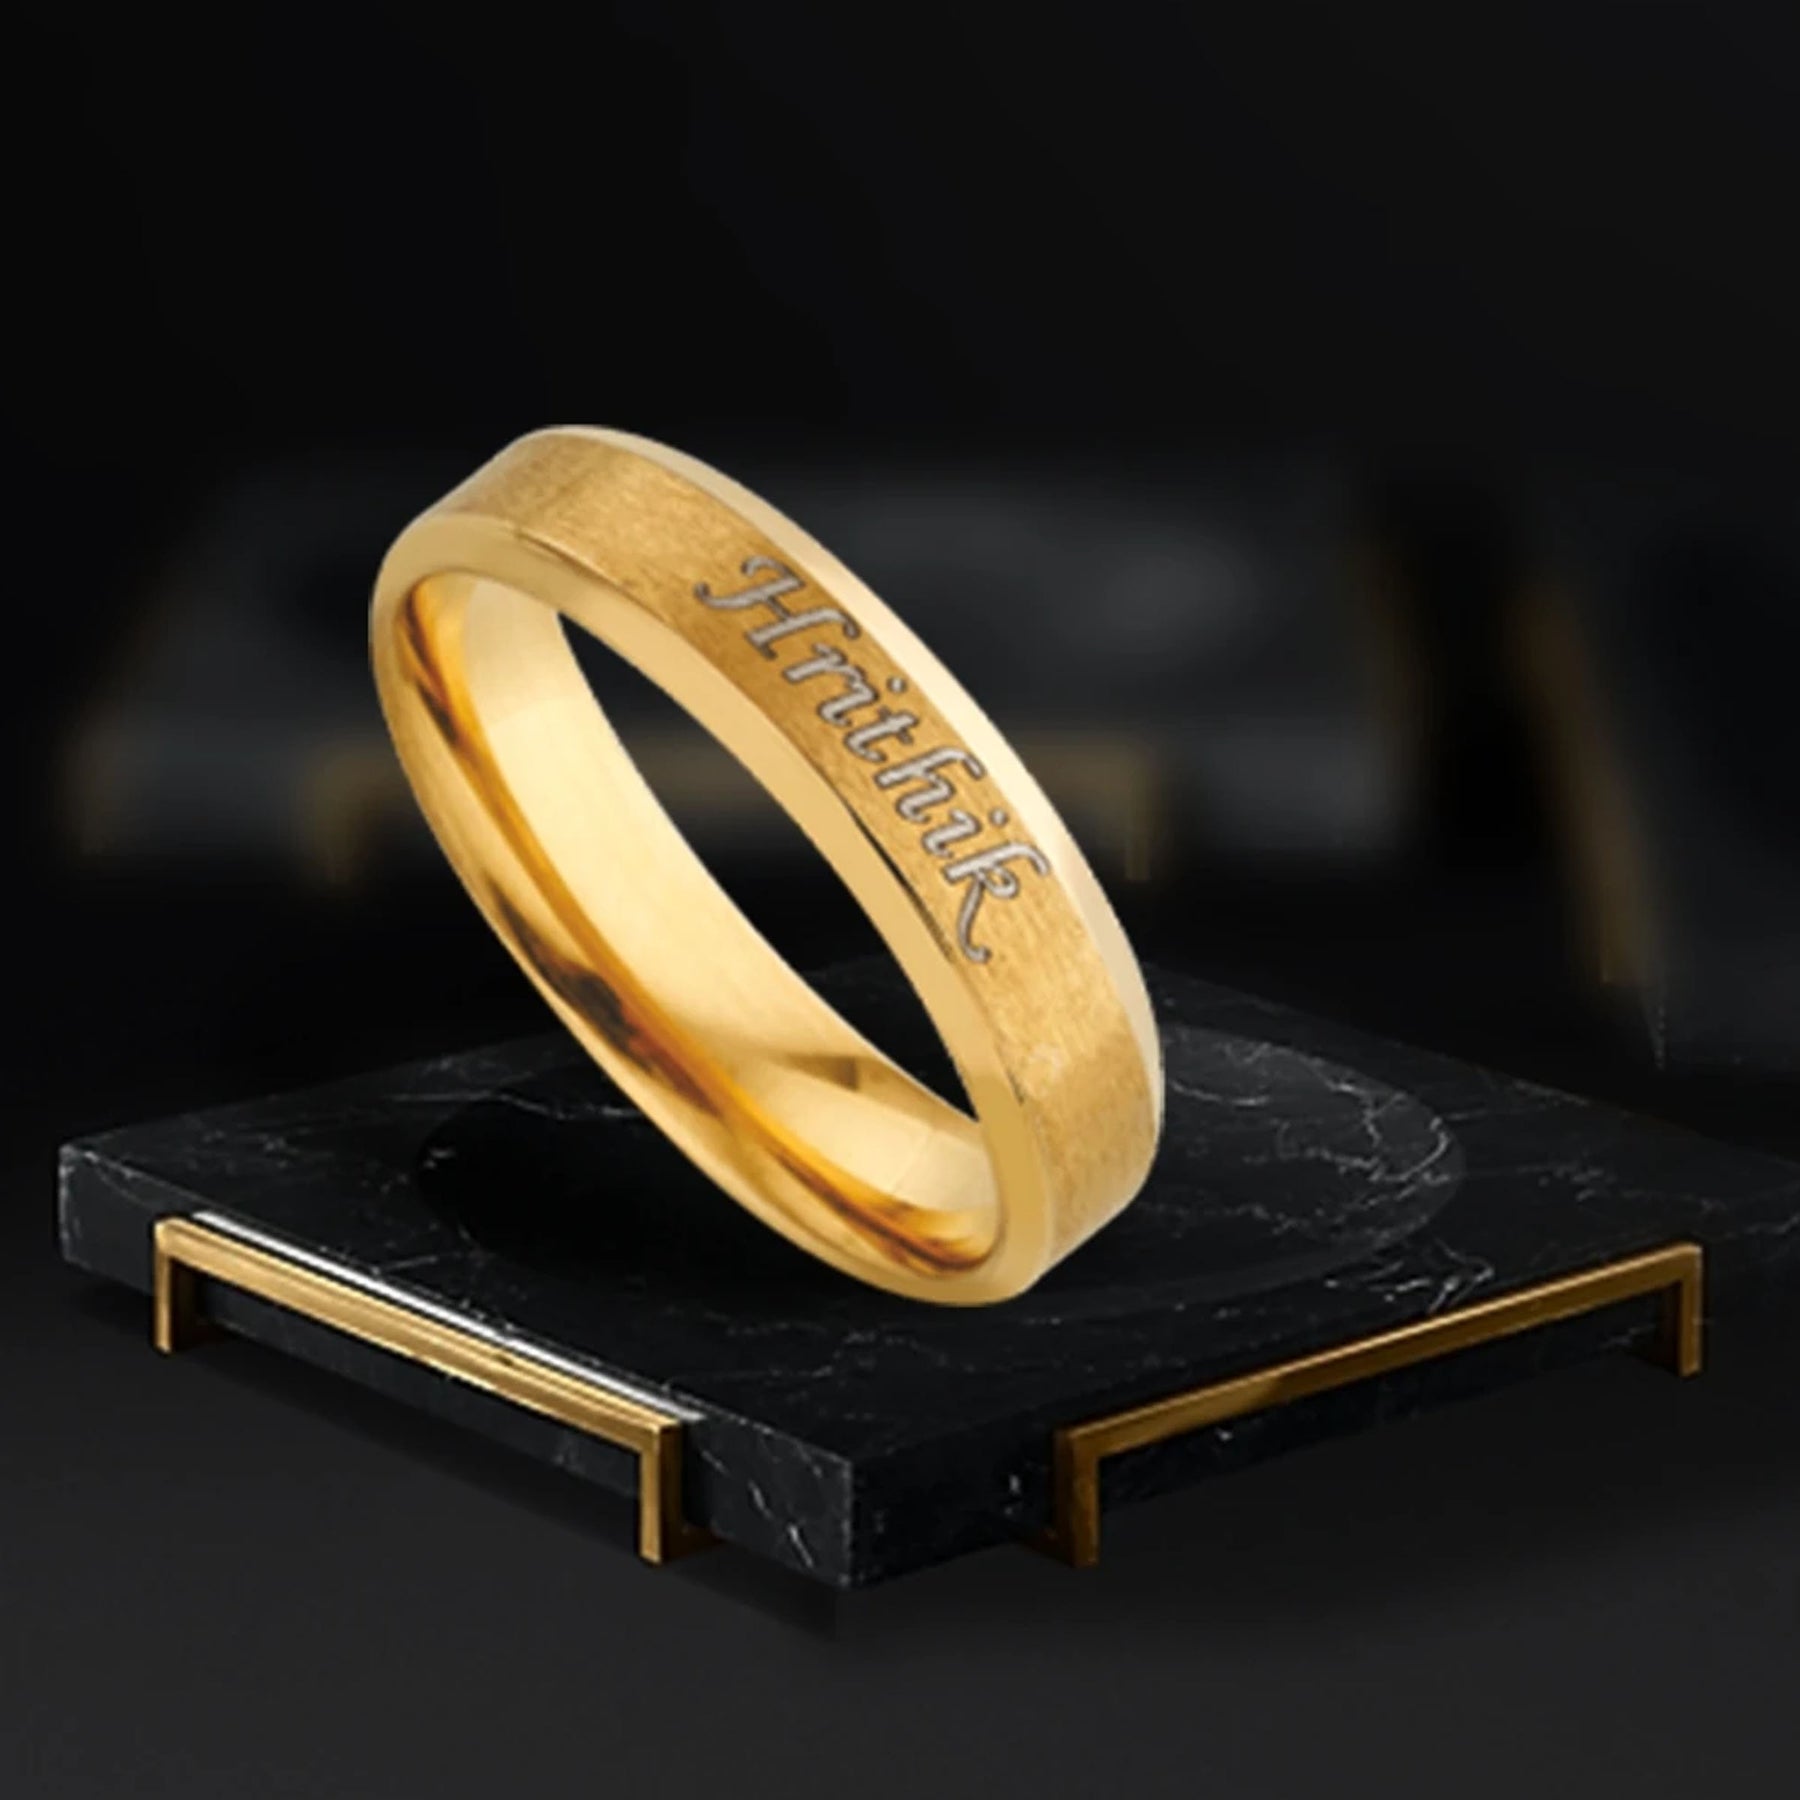 The One Name Ring - Gold Vermeil - Oak & Luna